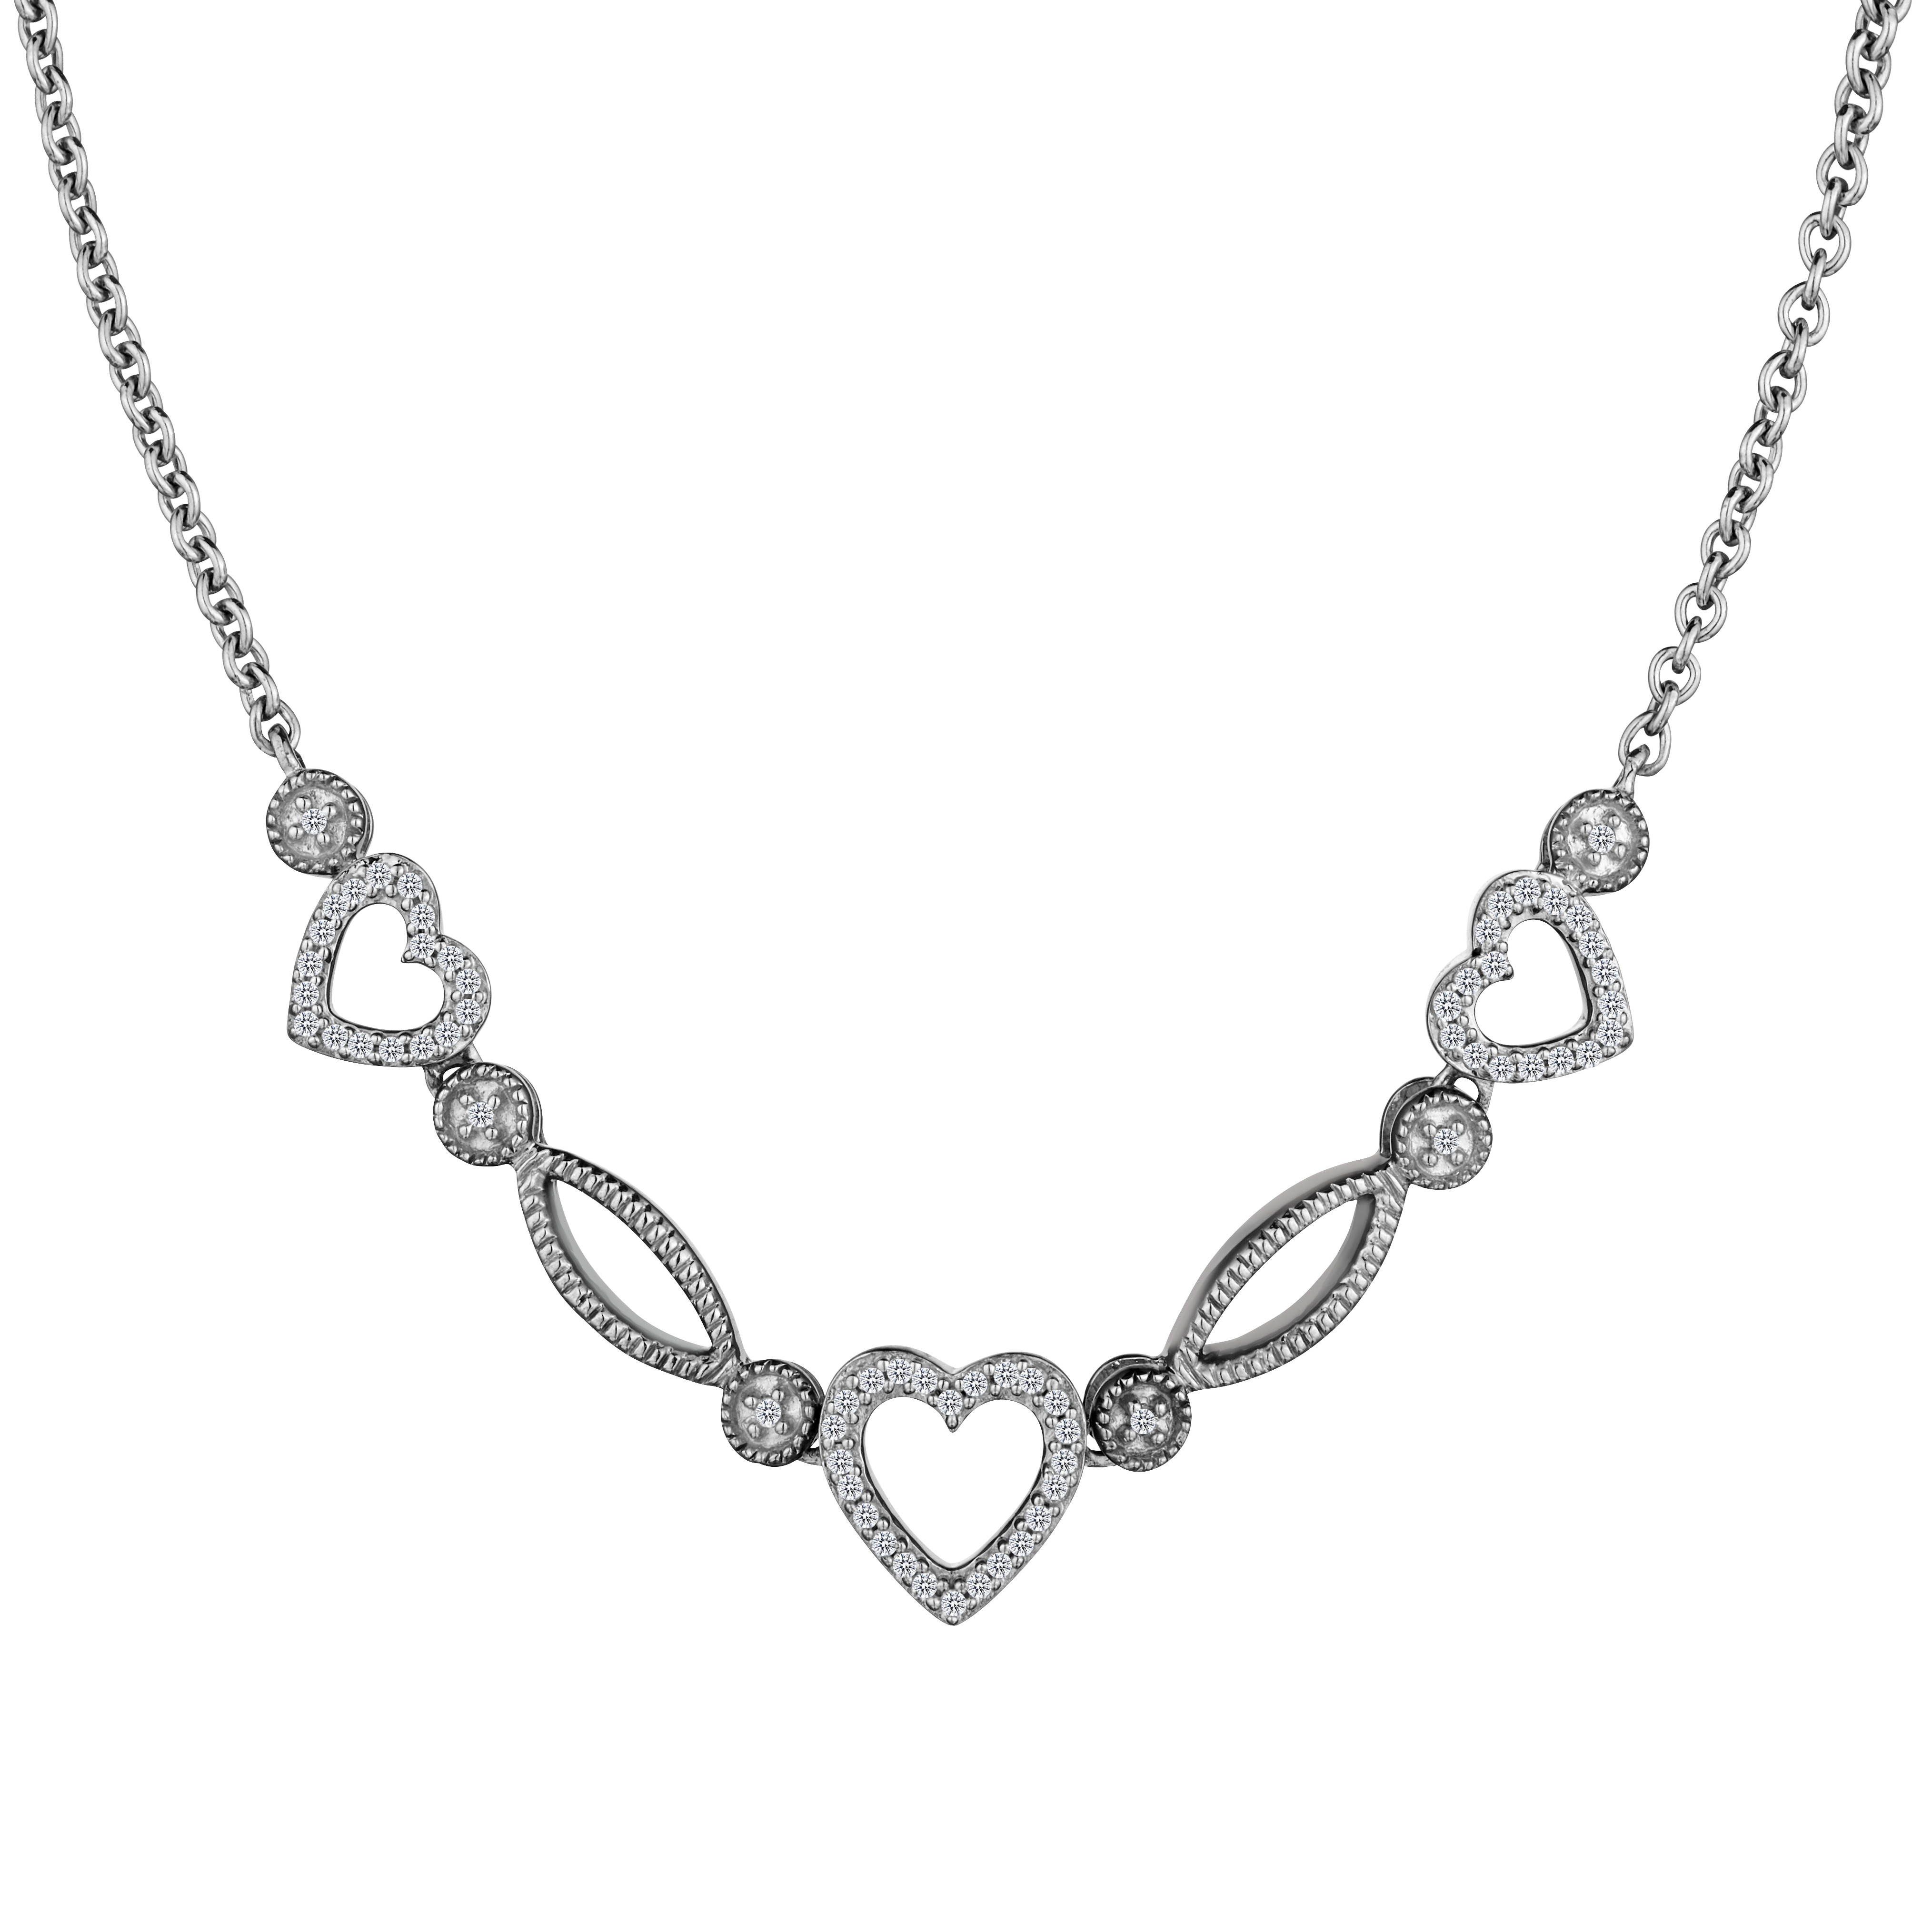 .18 Carat Diamond "Past, Present, Future" Heart Necklace, Silver.....................NOW